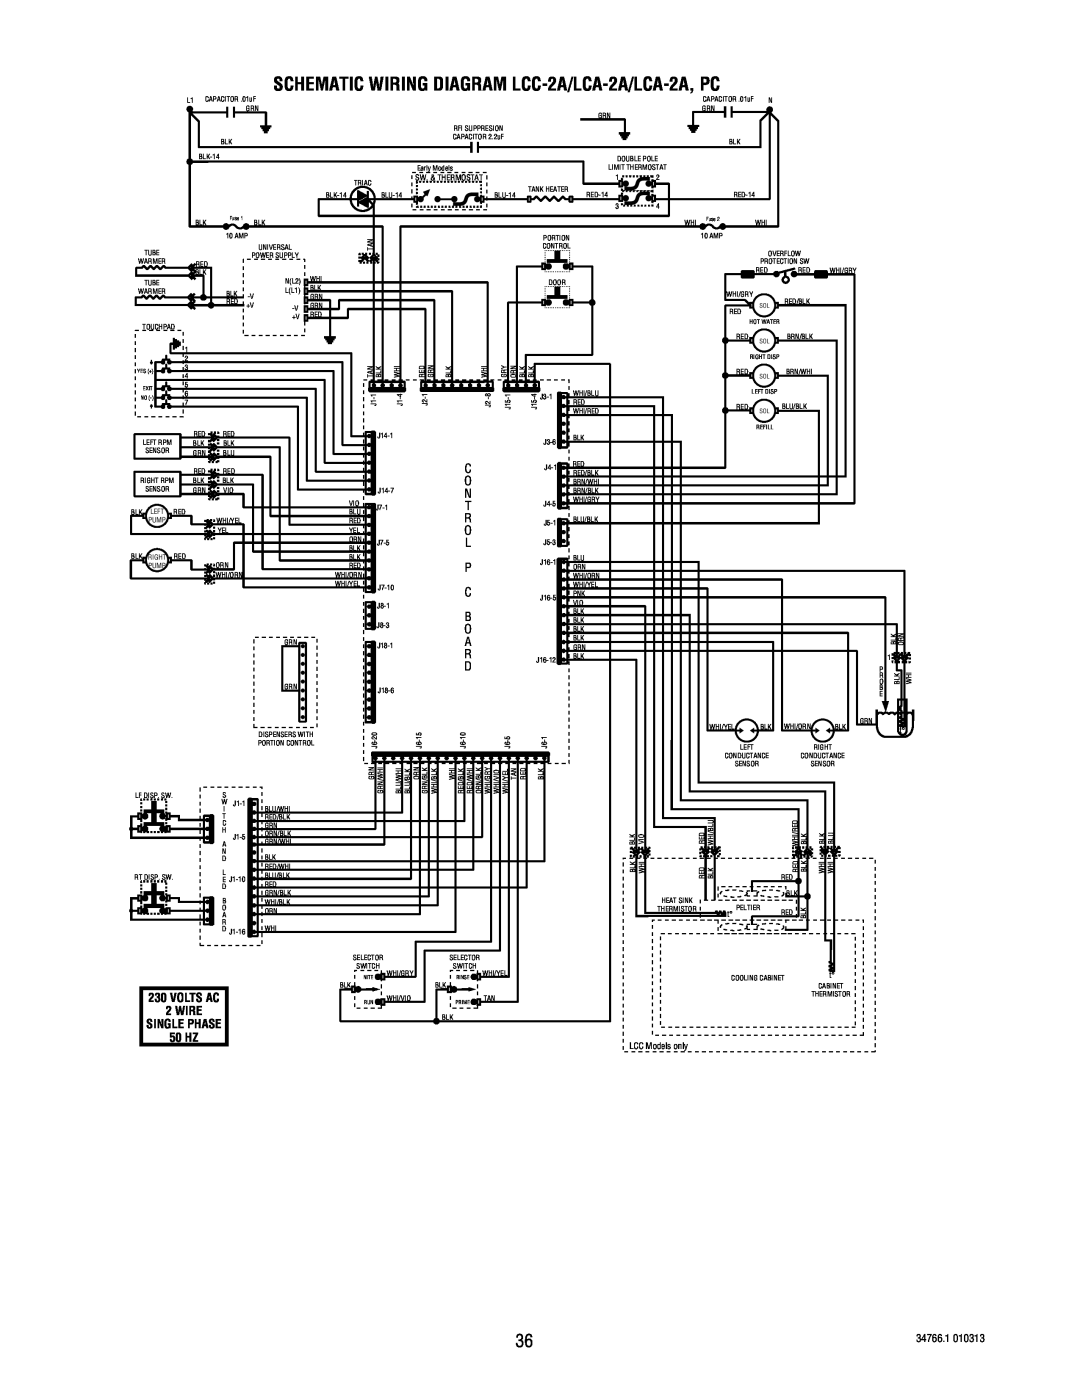 Bunn LCA-2 PC manual SCHEMATIC WIRING DIAGRAM LCC-2A/LCA-2A/LCA-2A, PC, Volts Ac, Wire, Single Phase, 50 HZ 